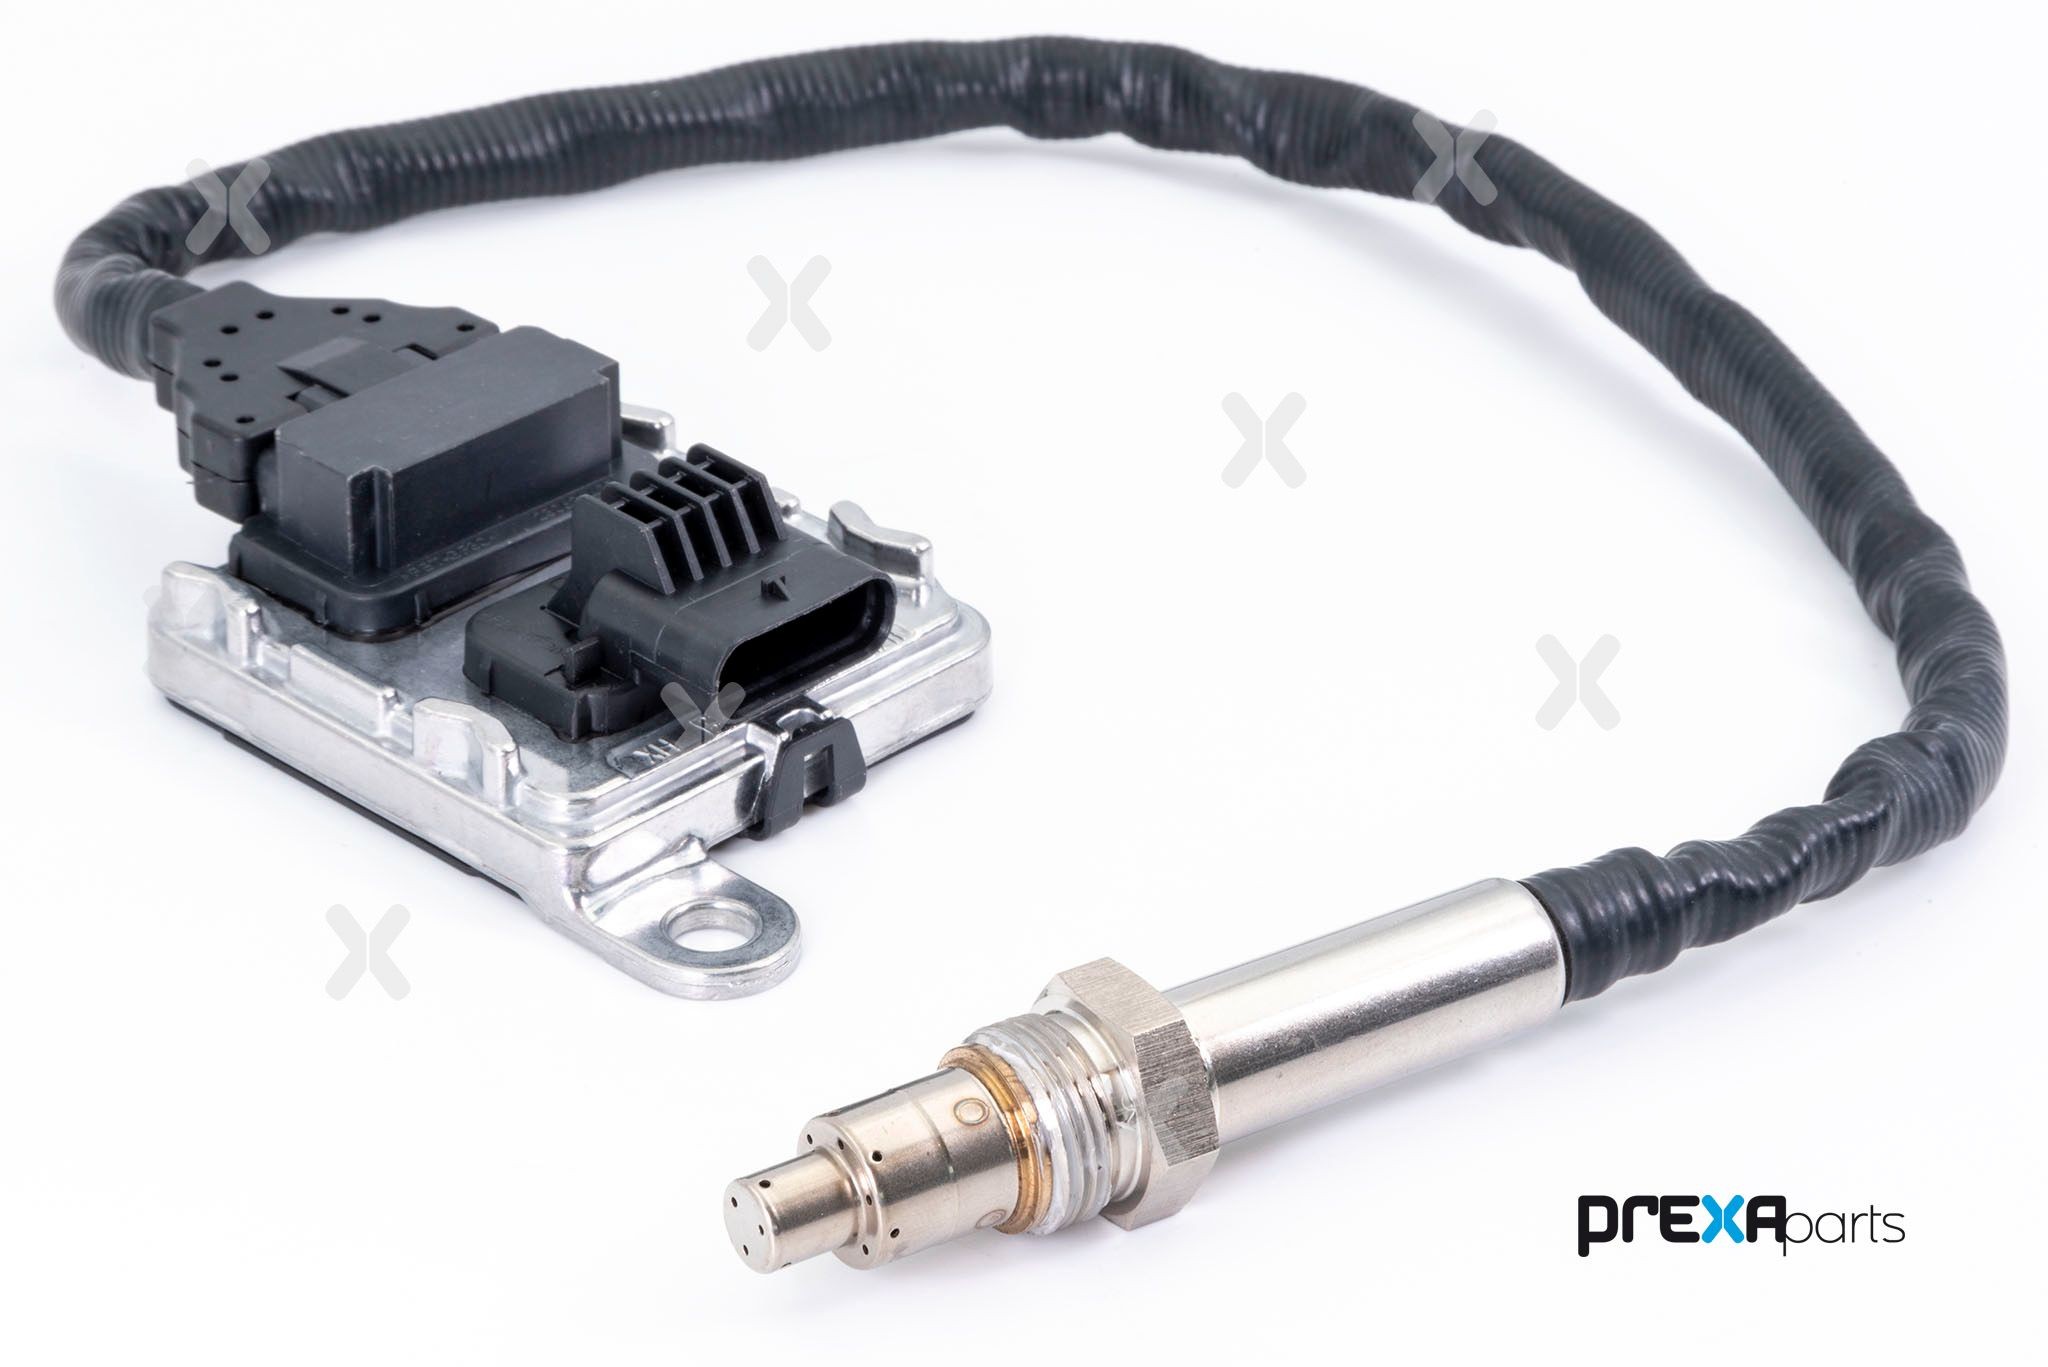 Original P304099 PREXAparts Lambda sensor experience and price